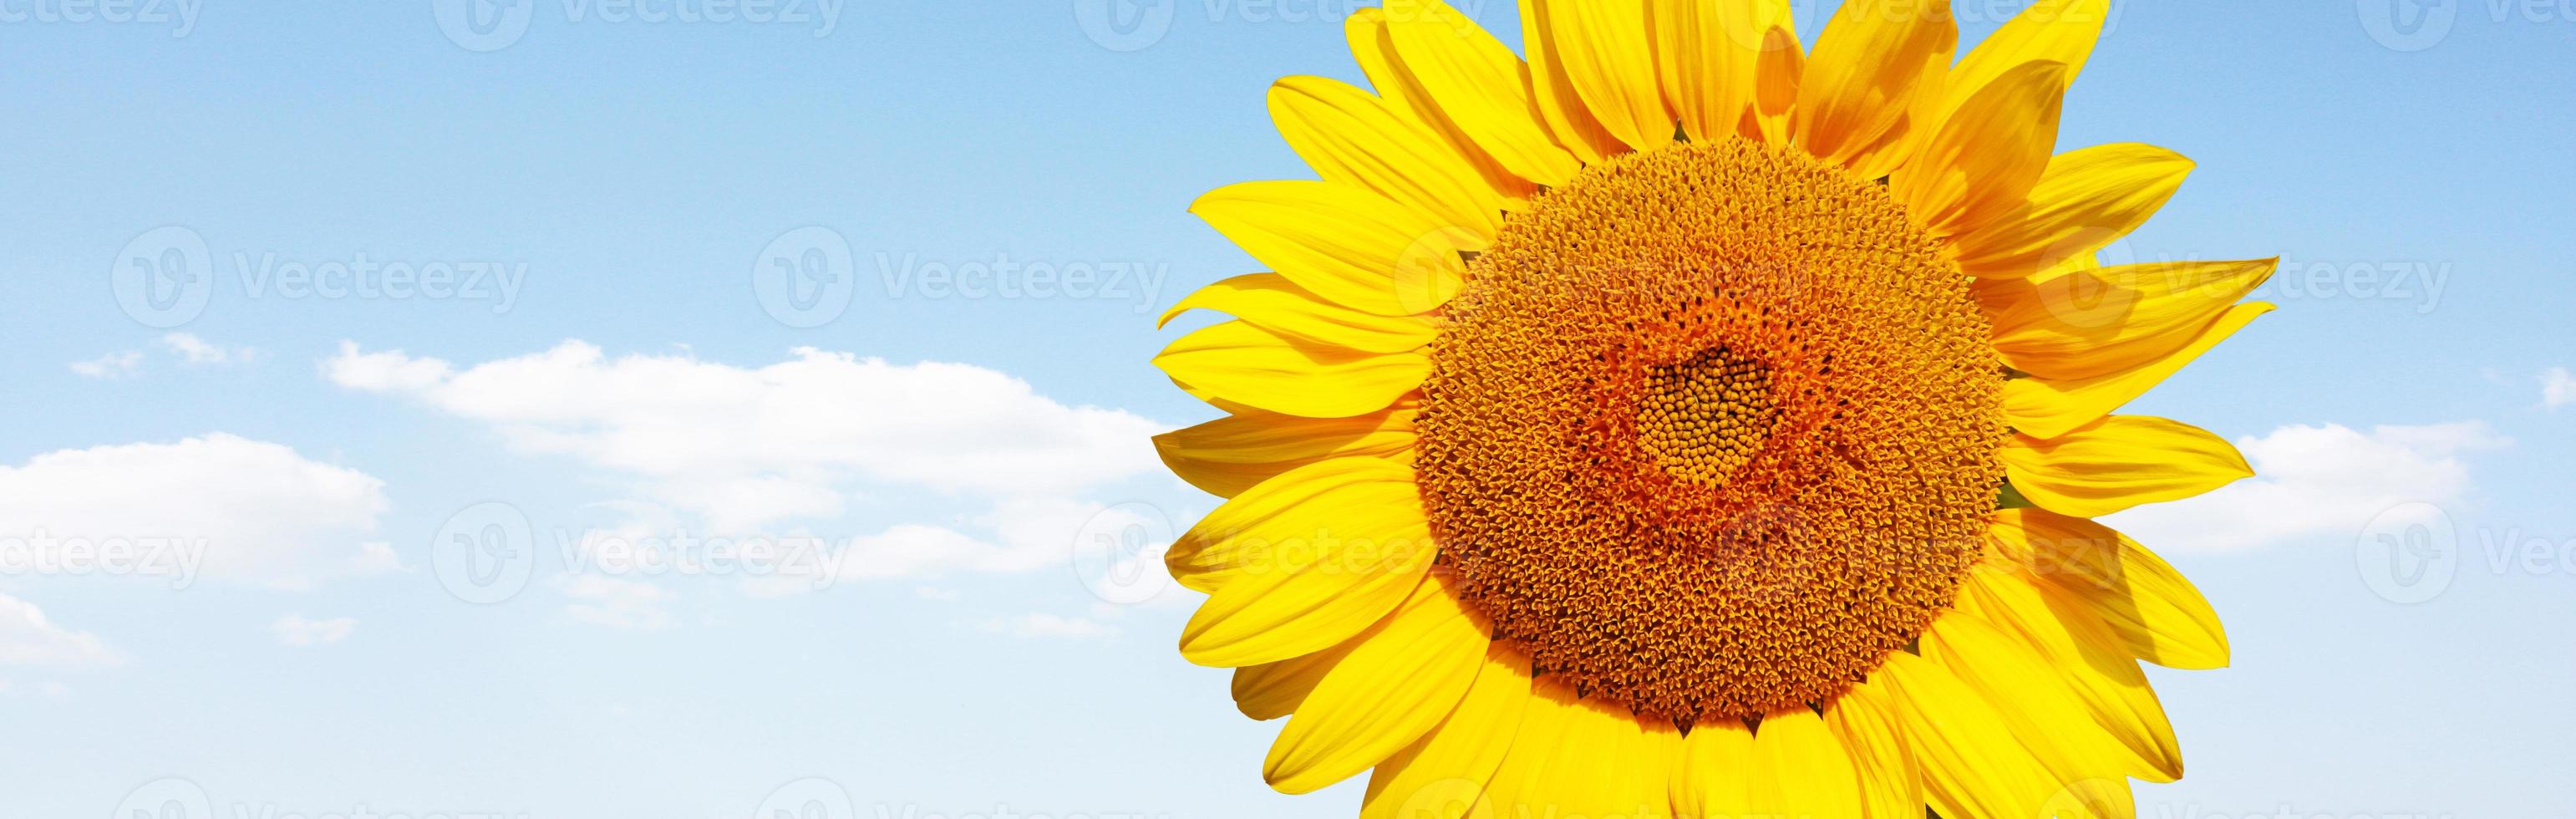 fält av blommande solrosor på en bakgrund blå himmel foto